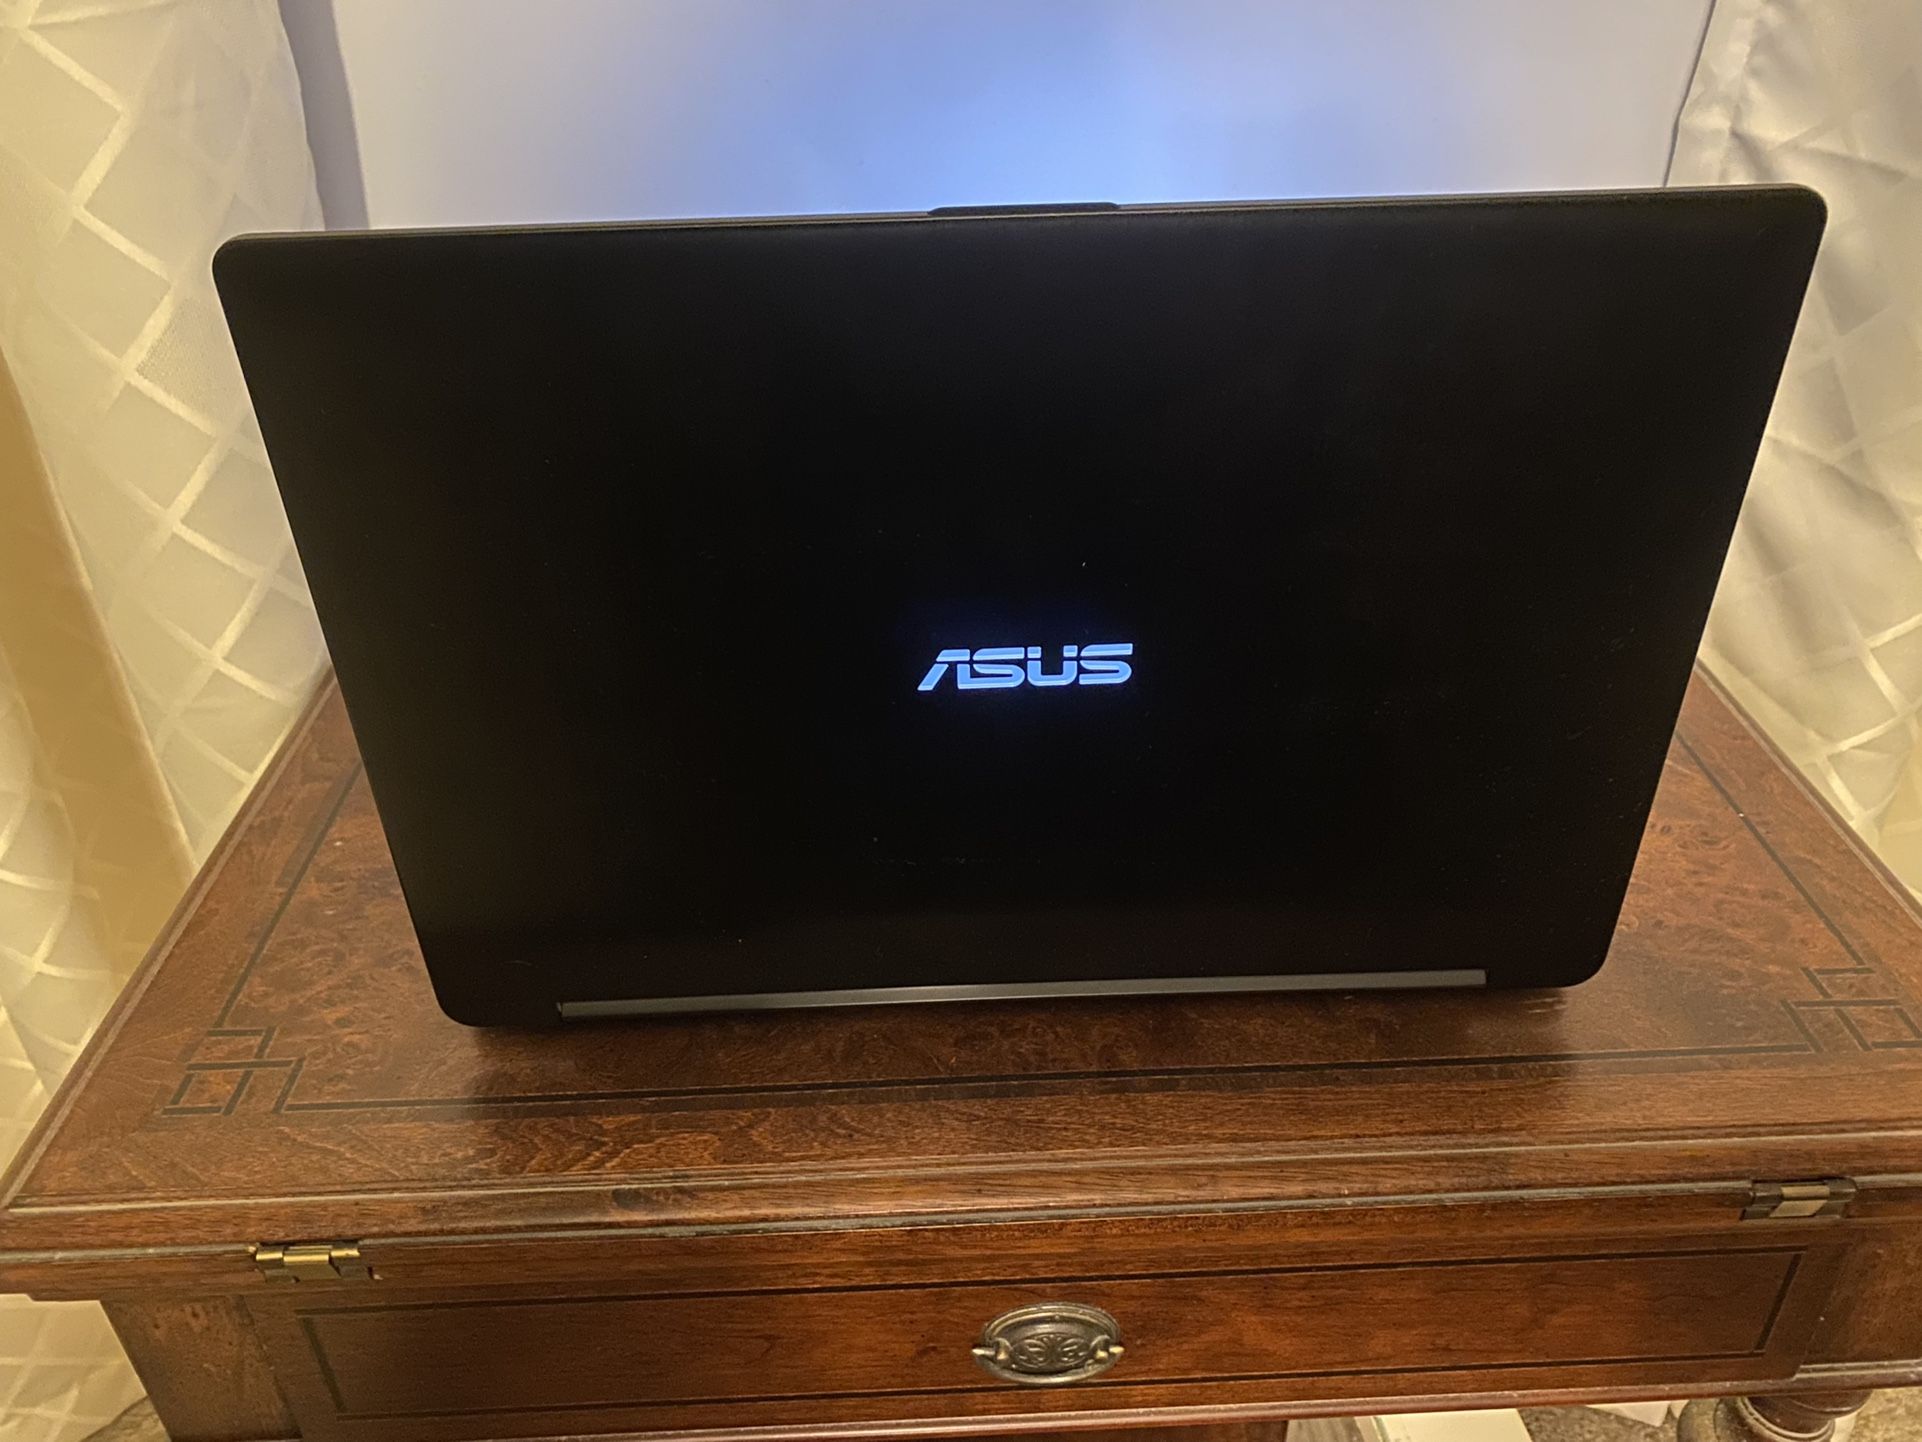 ASUS Model Q502L Notebook PC